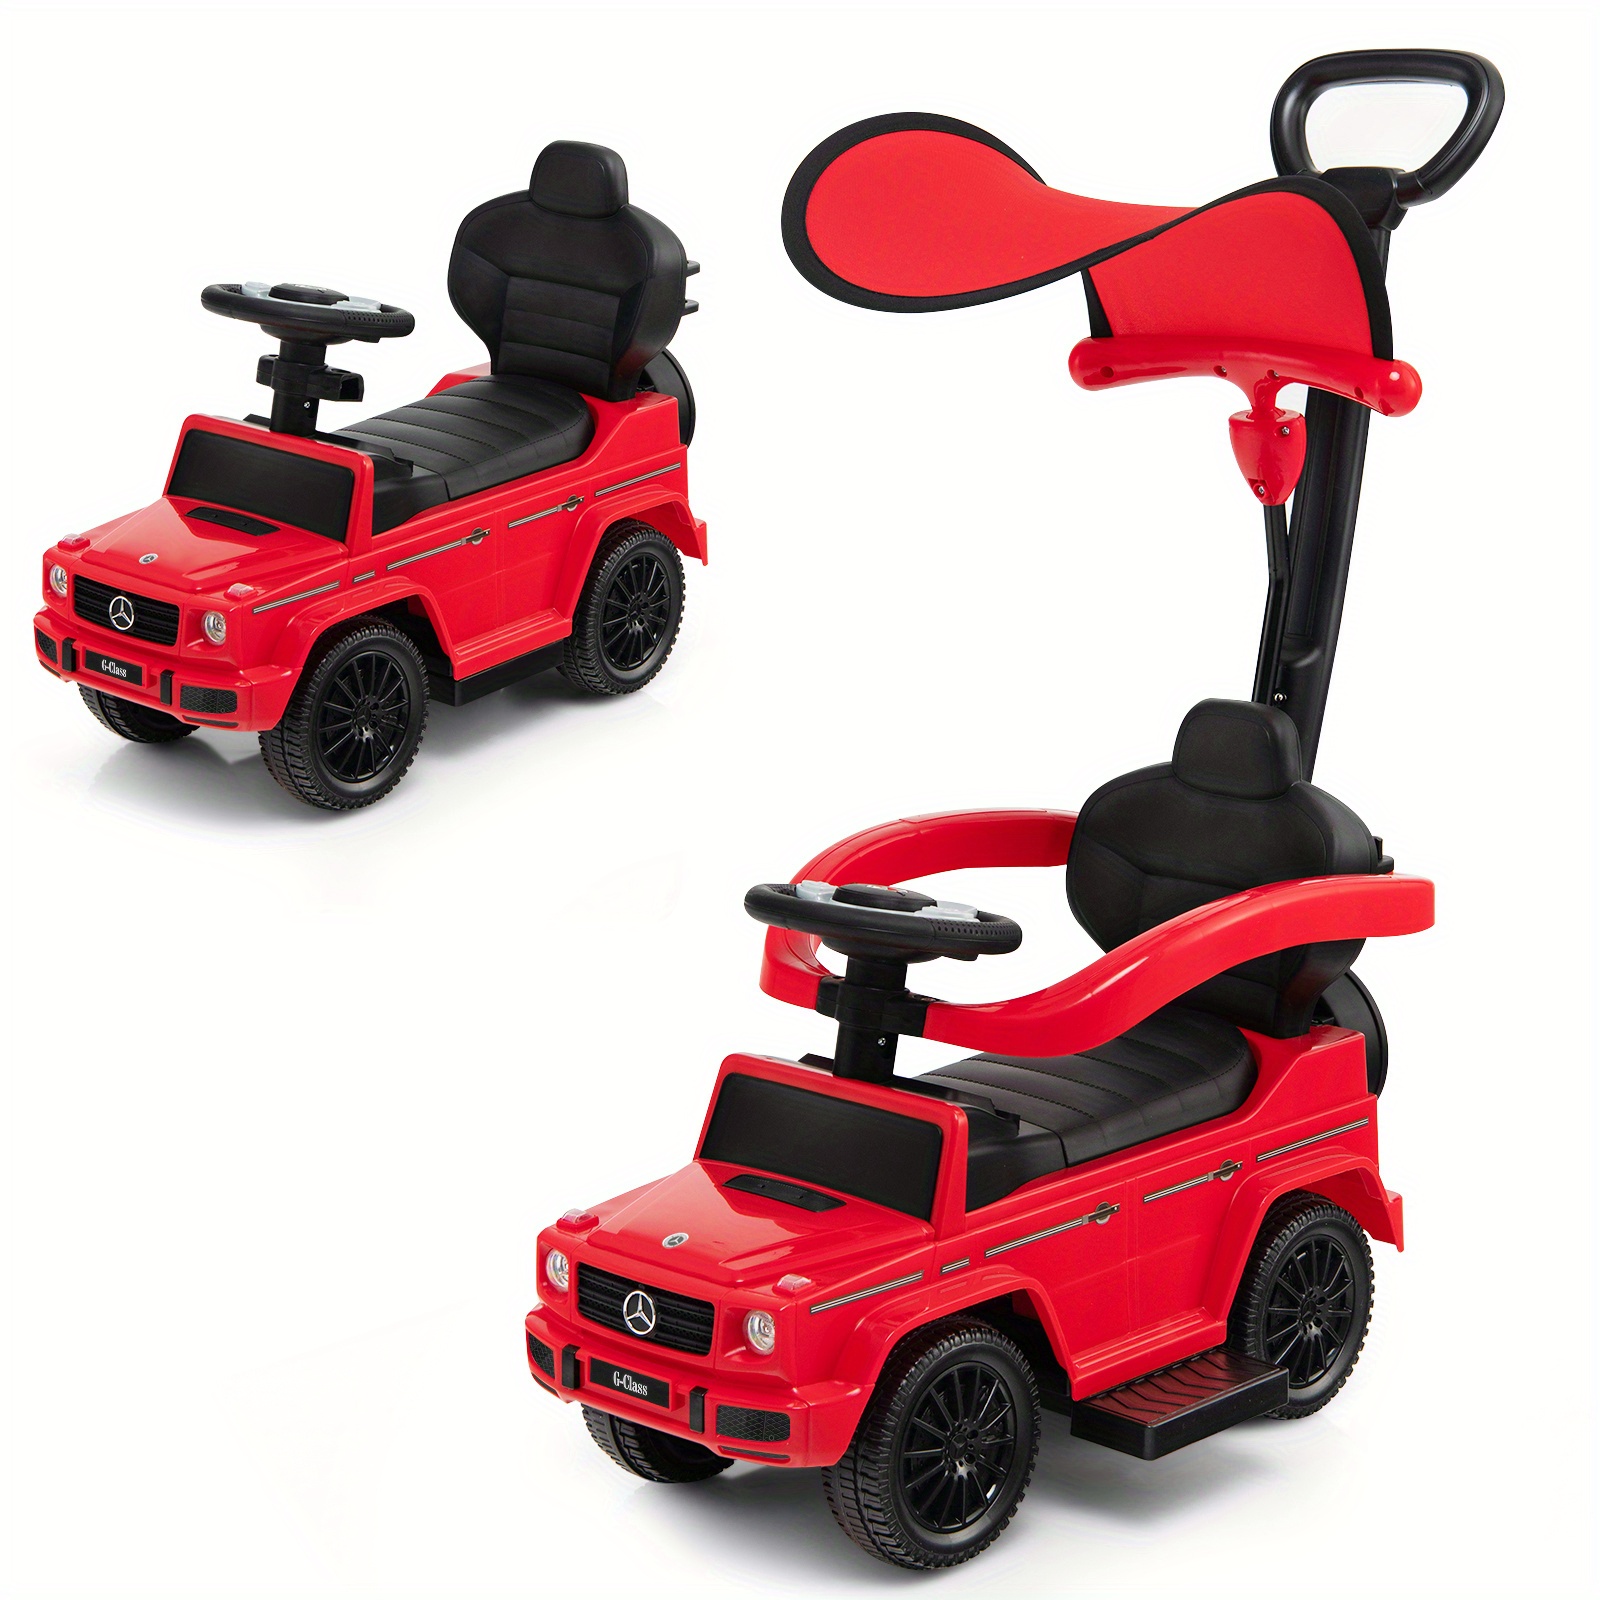 

Multigot 3 In 1 Ride On Push Car G350 Stroller Sliding Car W/ Canopy Red